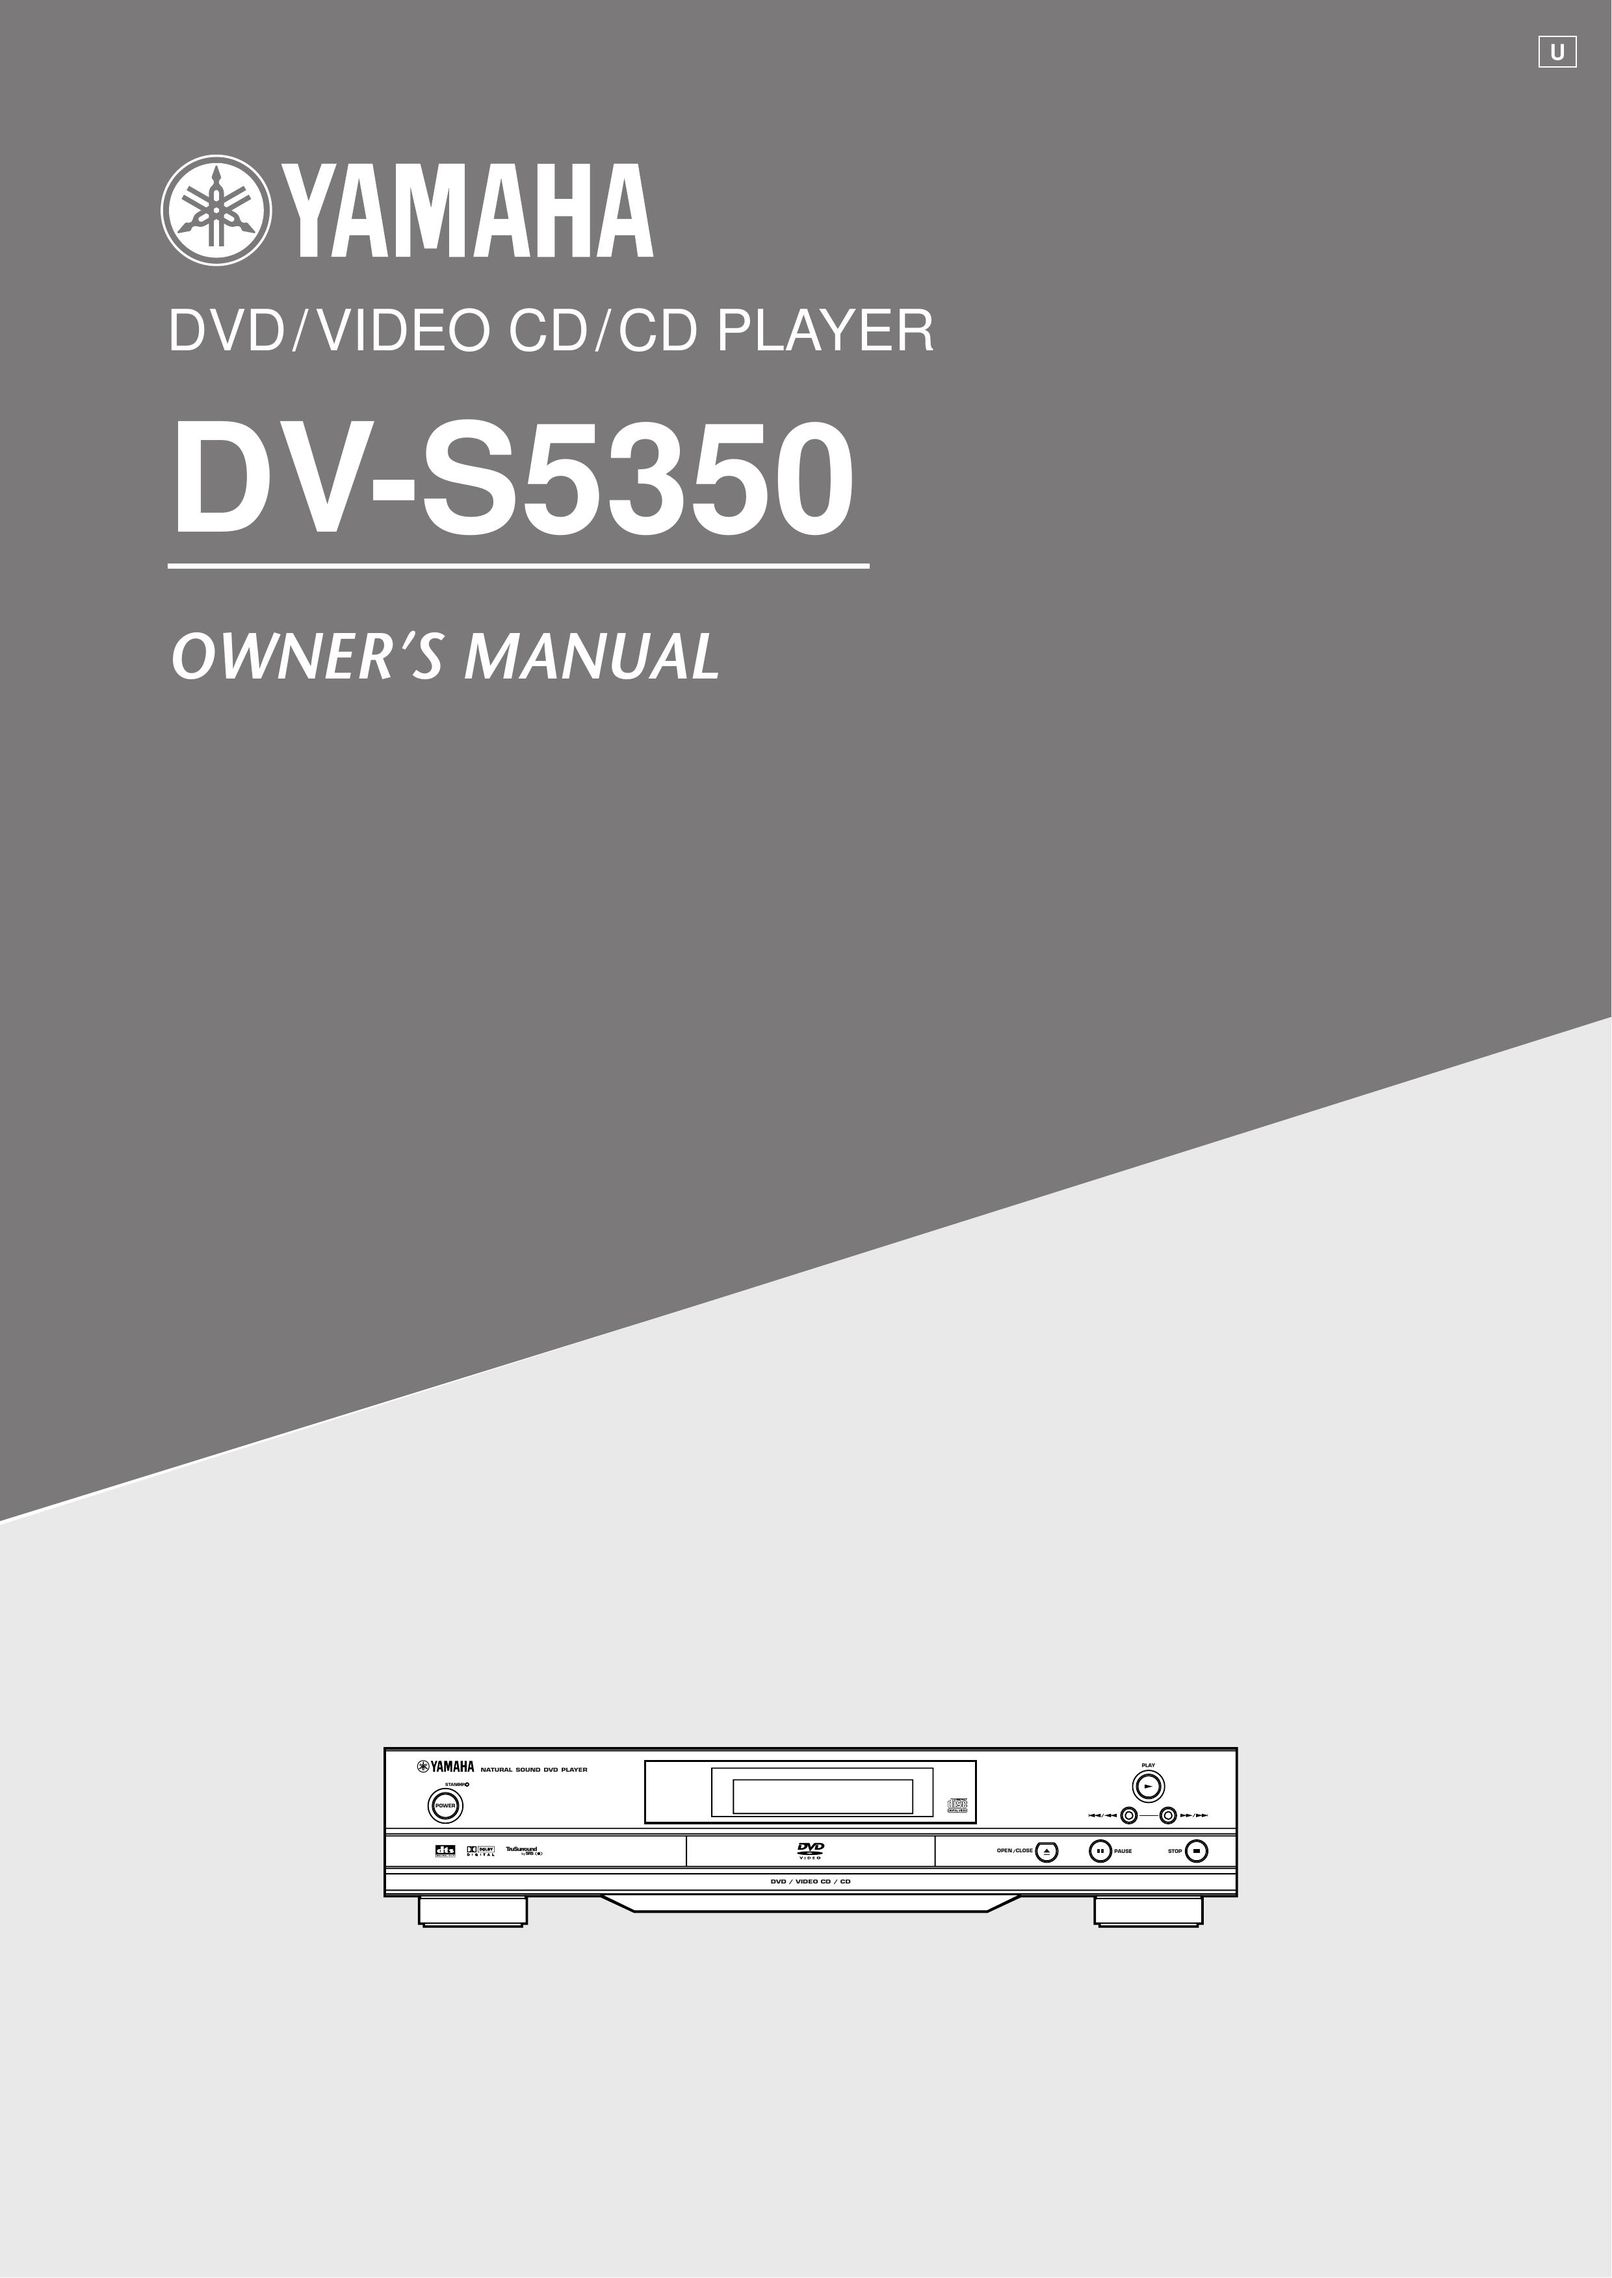 Yamaha DV-S5350 DVD Player User Manual